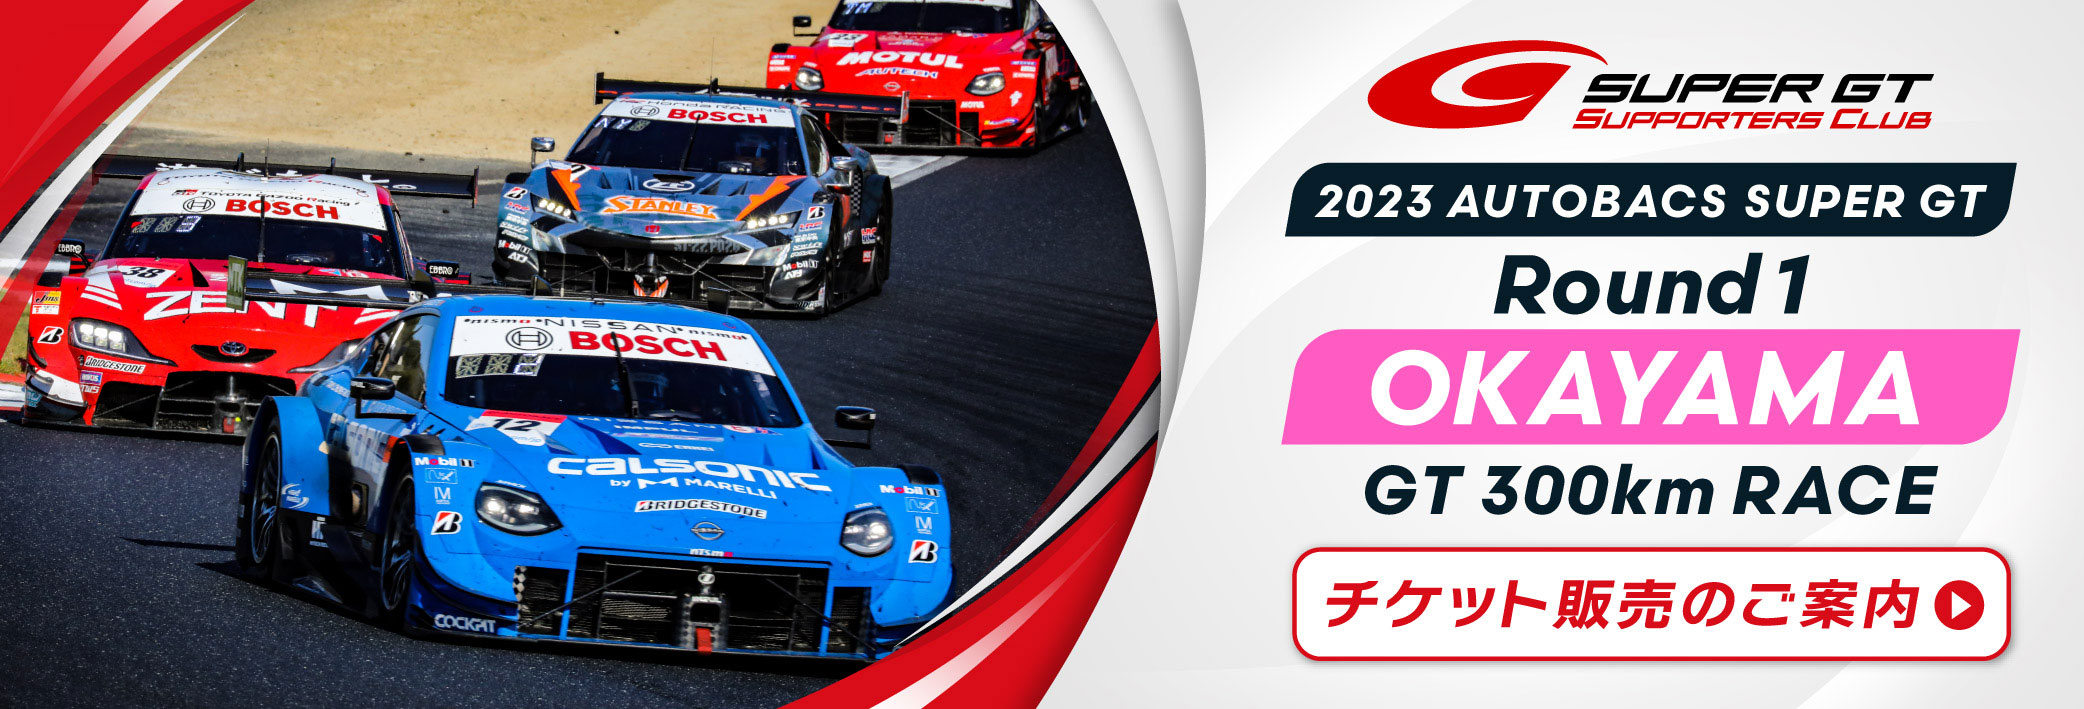 2023 AUTOBACS SUPER GT Round1 OKAYAMA GT 300km RACEチケット販売の